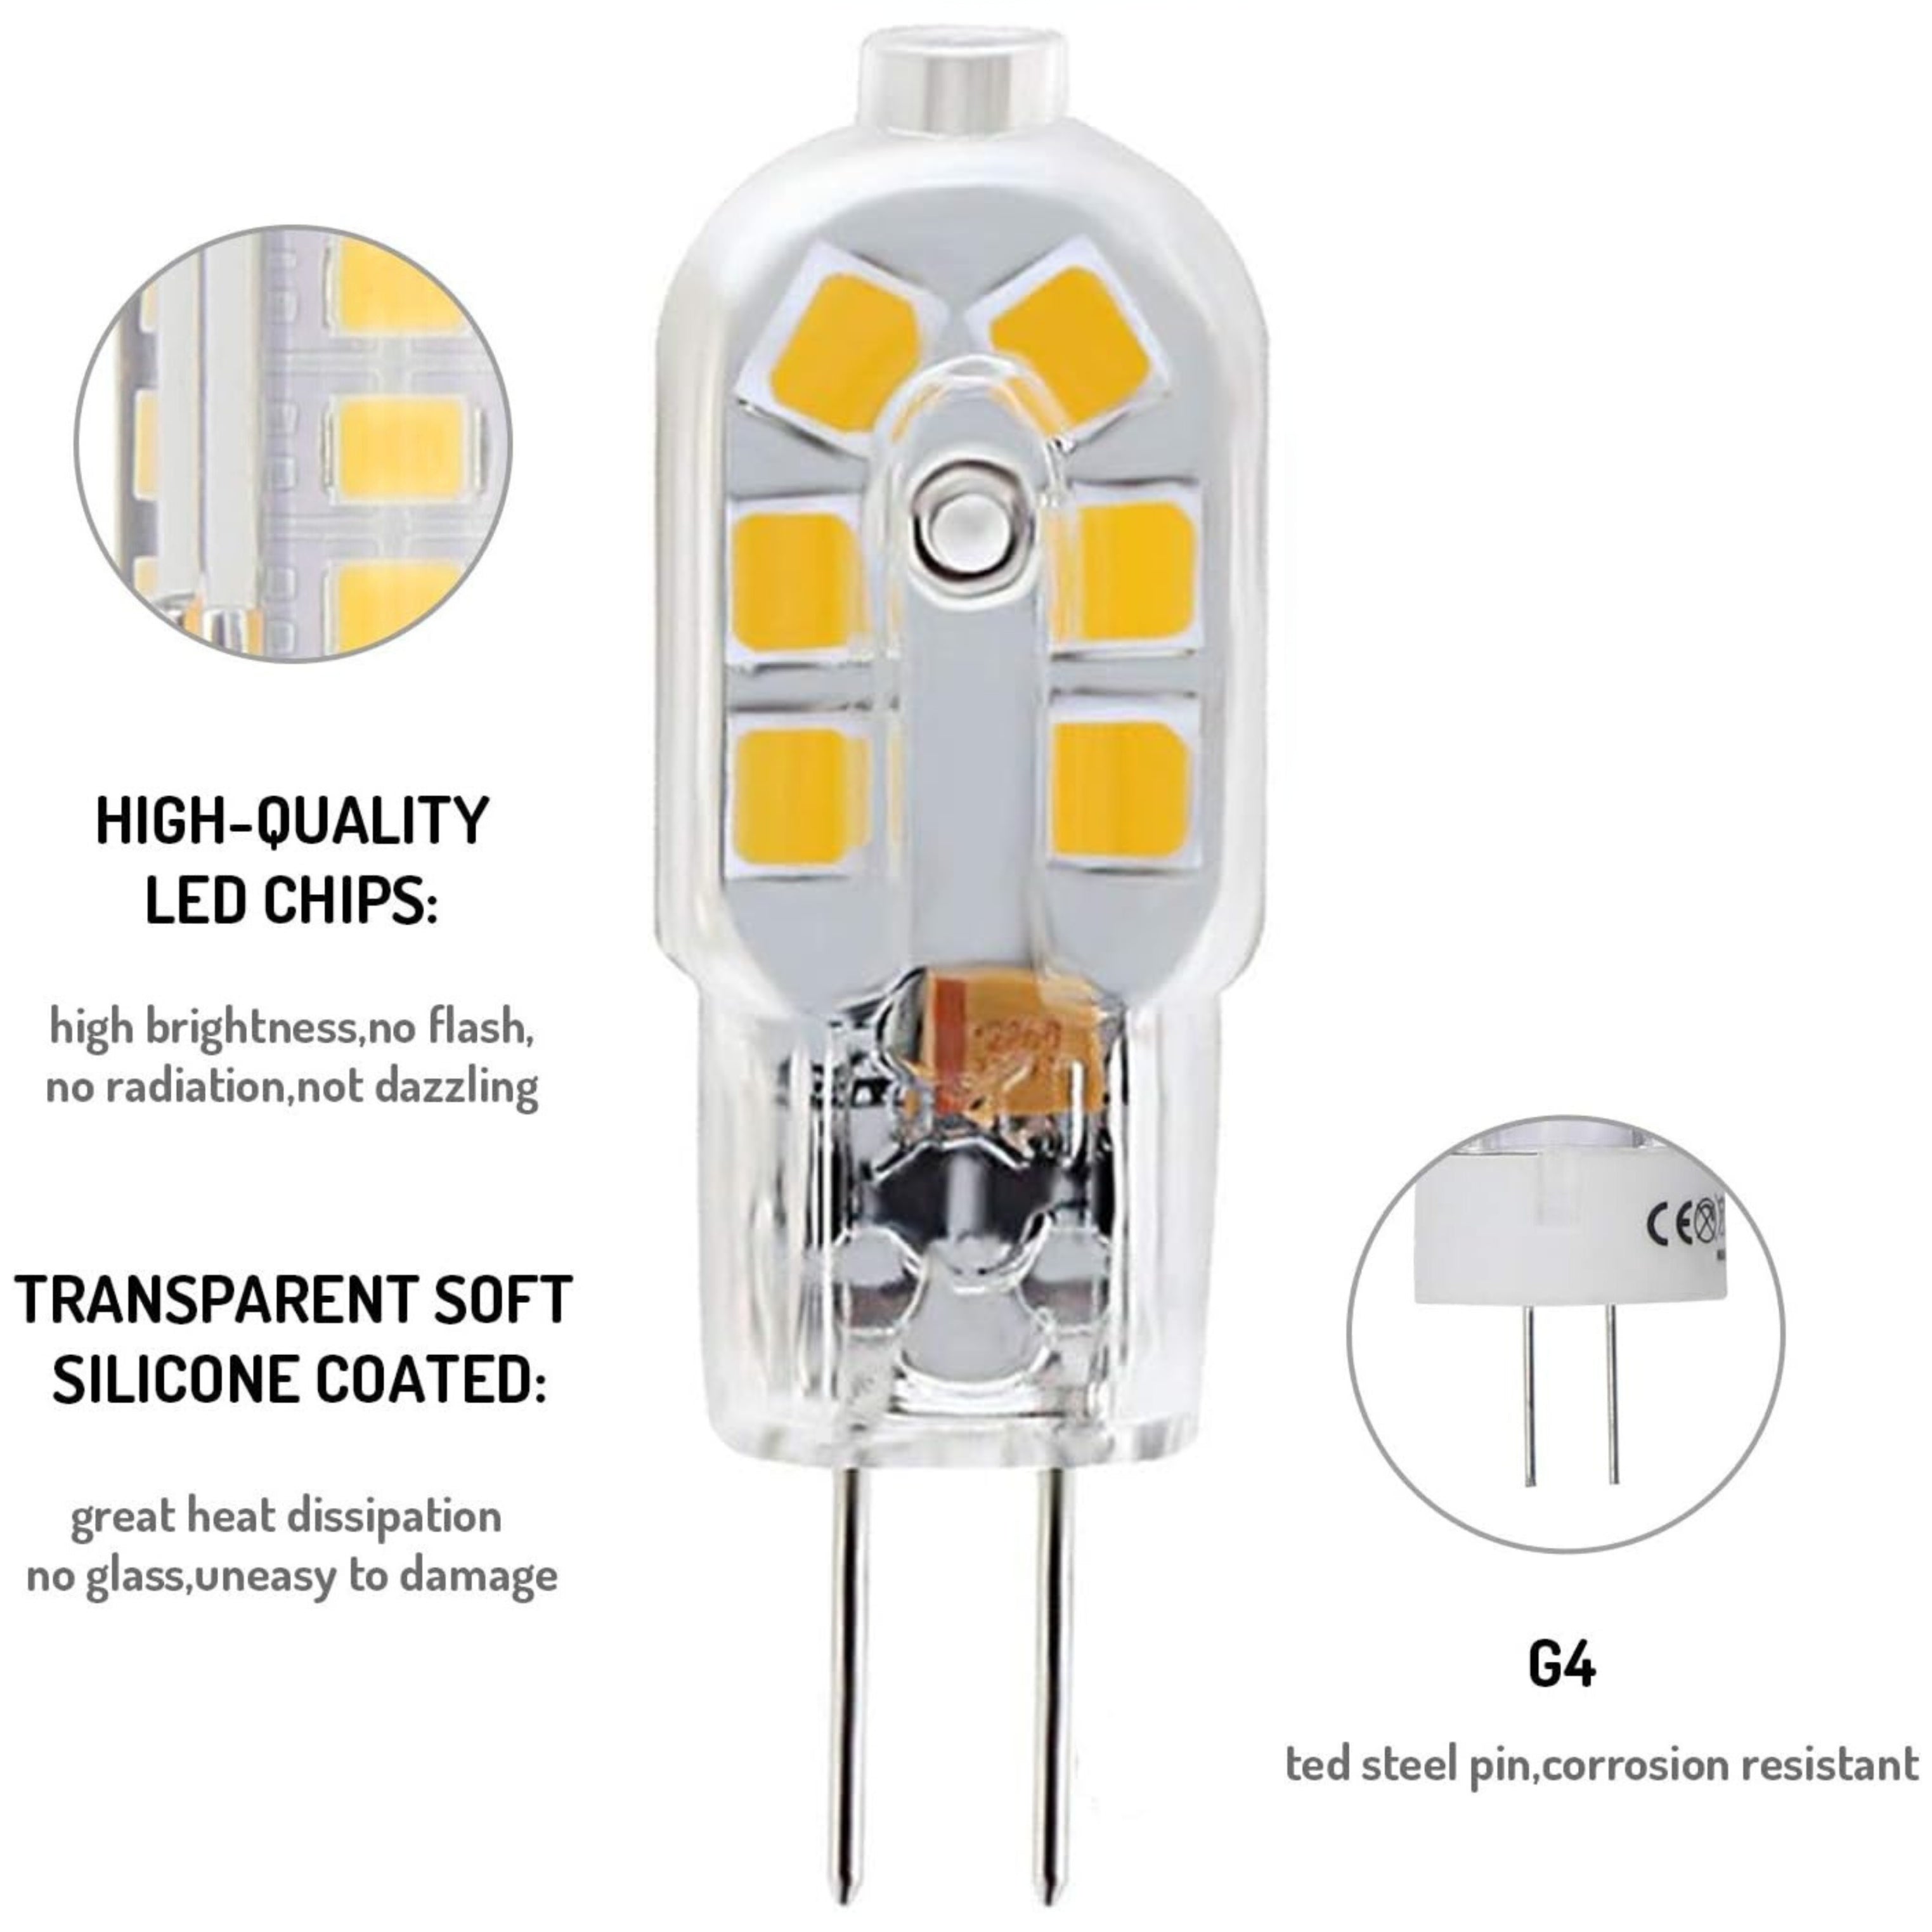 Lumina Lighting® 2W G4 LED Bulb | AC/DC 12V 3000K Warm White, 190 Lumens | (10-Pack)